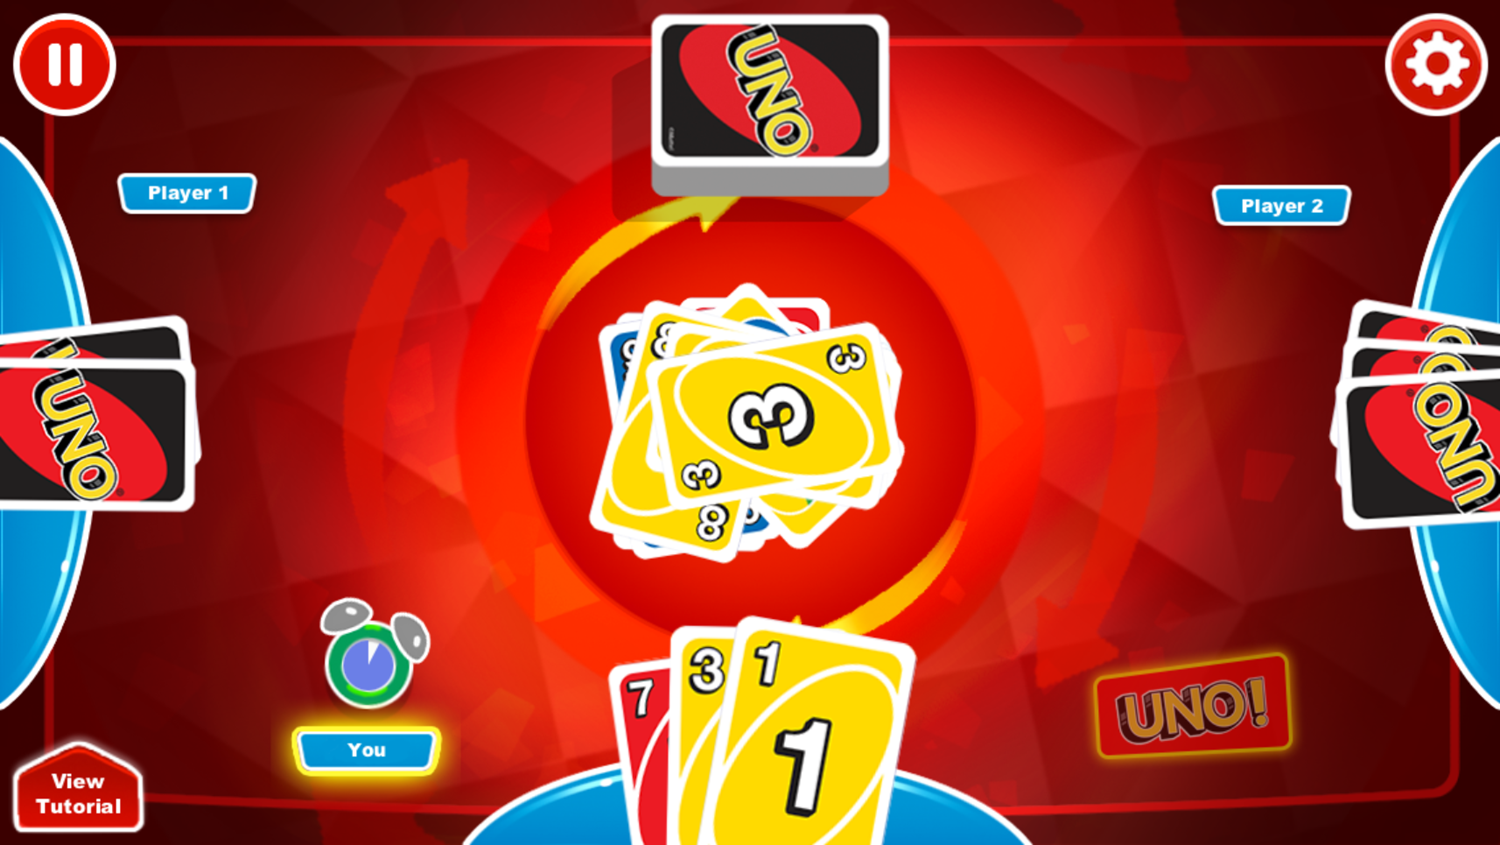 Uno Game Play Screenshot.